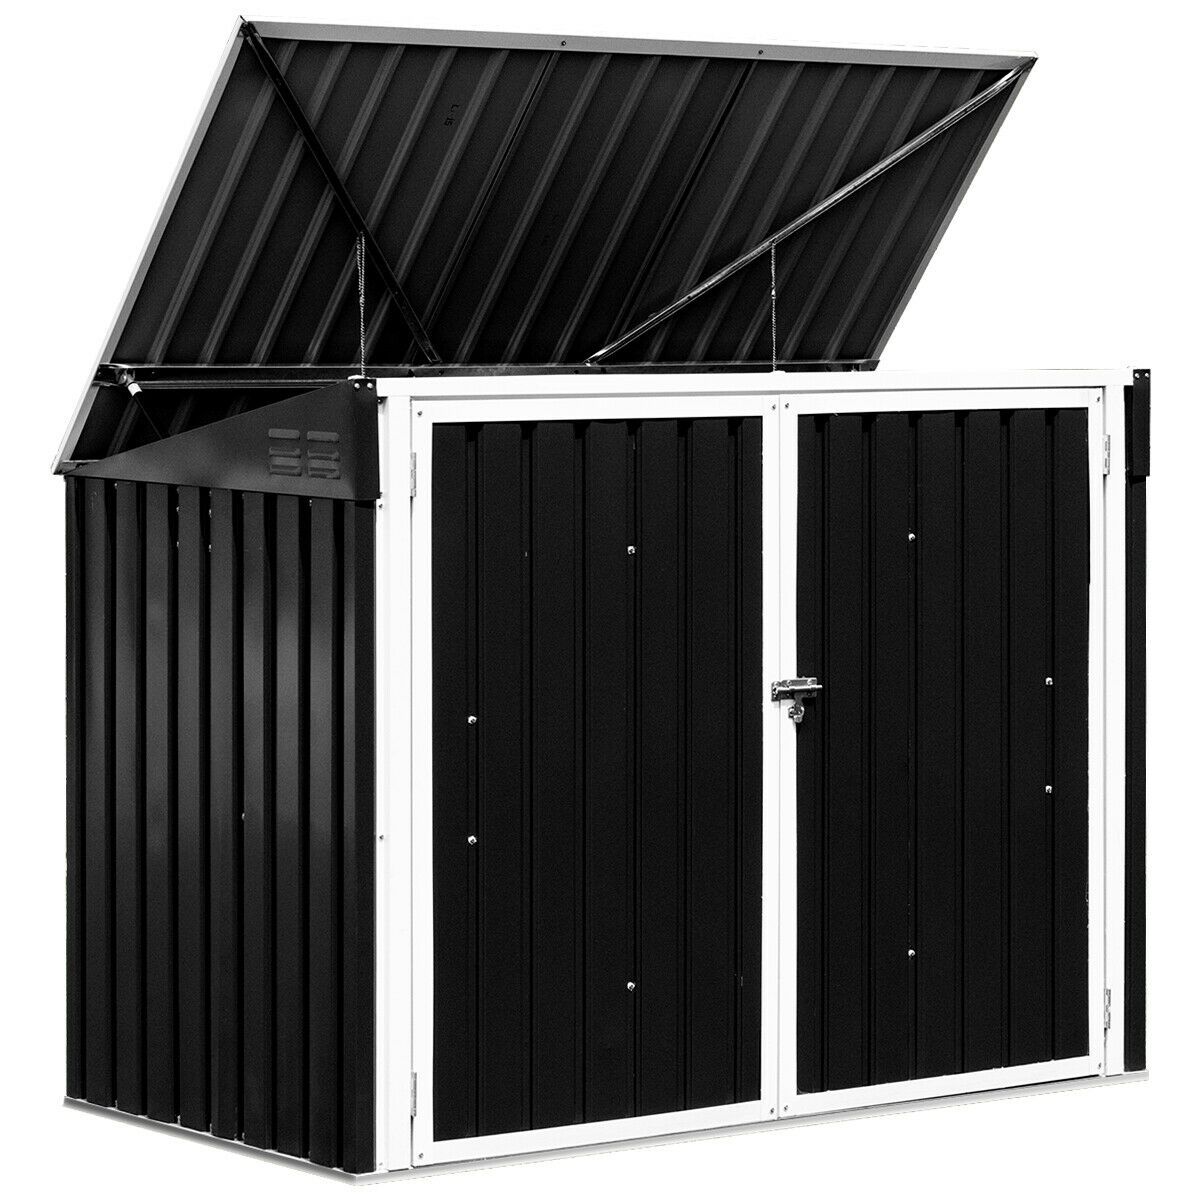 Garage Storage Containers